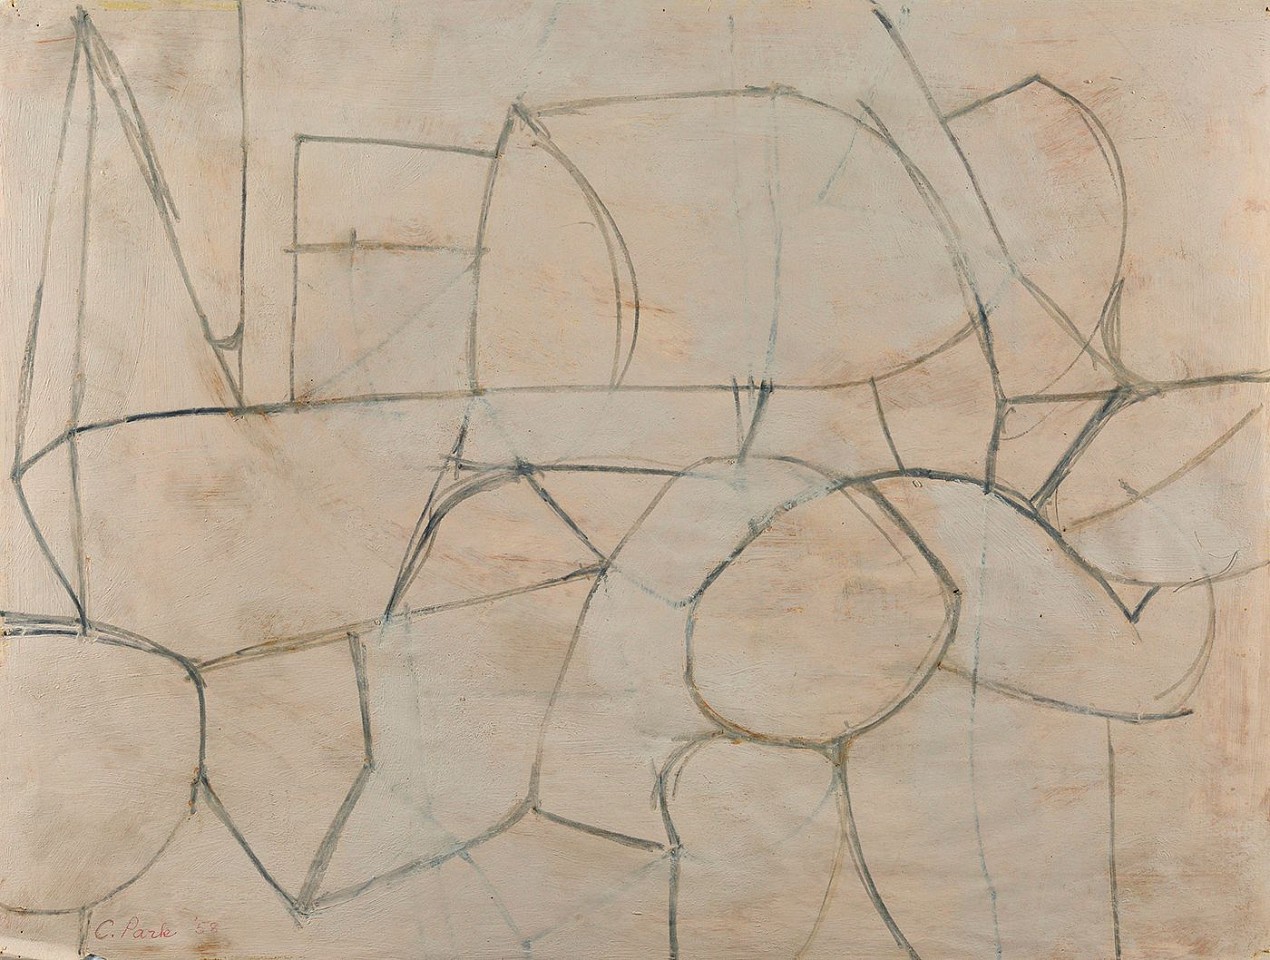 Charlotte Park, Untitled, 1958
Gouache and oil on paper, 18 x 24 in. (45.7 x 61 cm)
PAR-00117